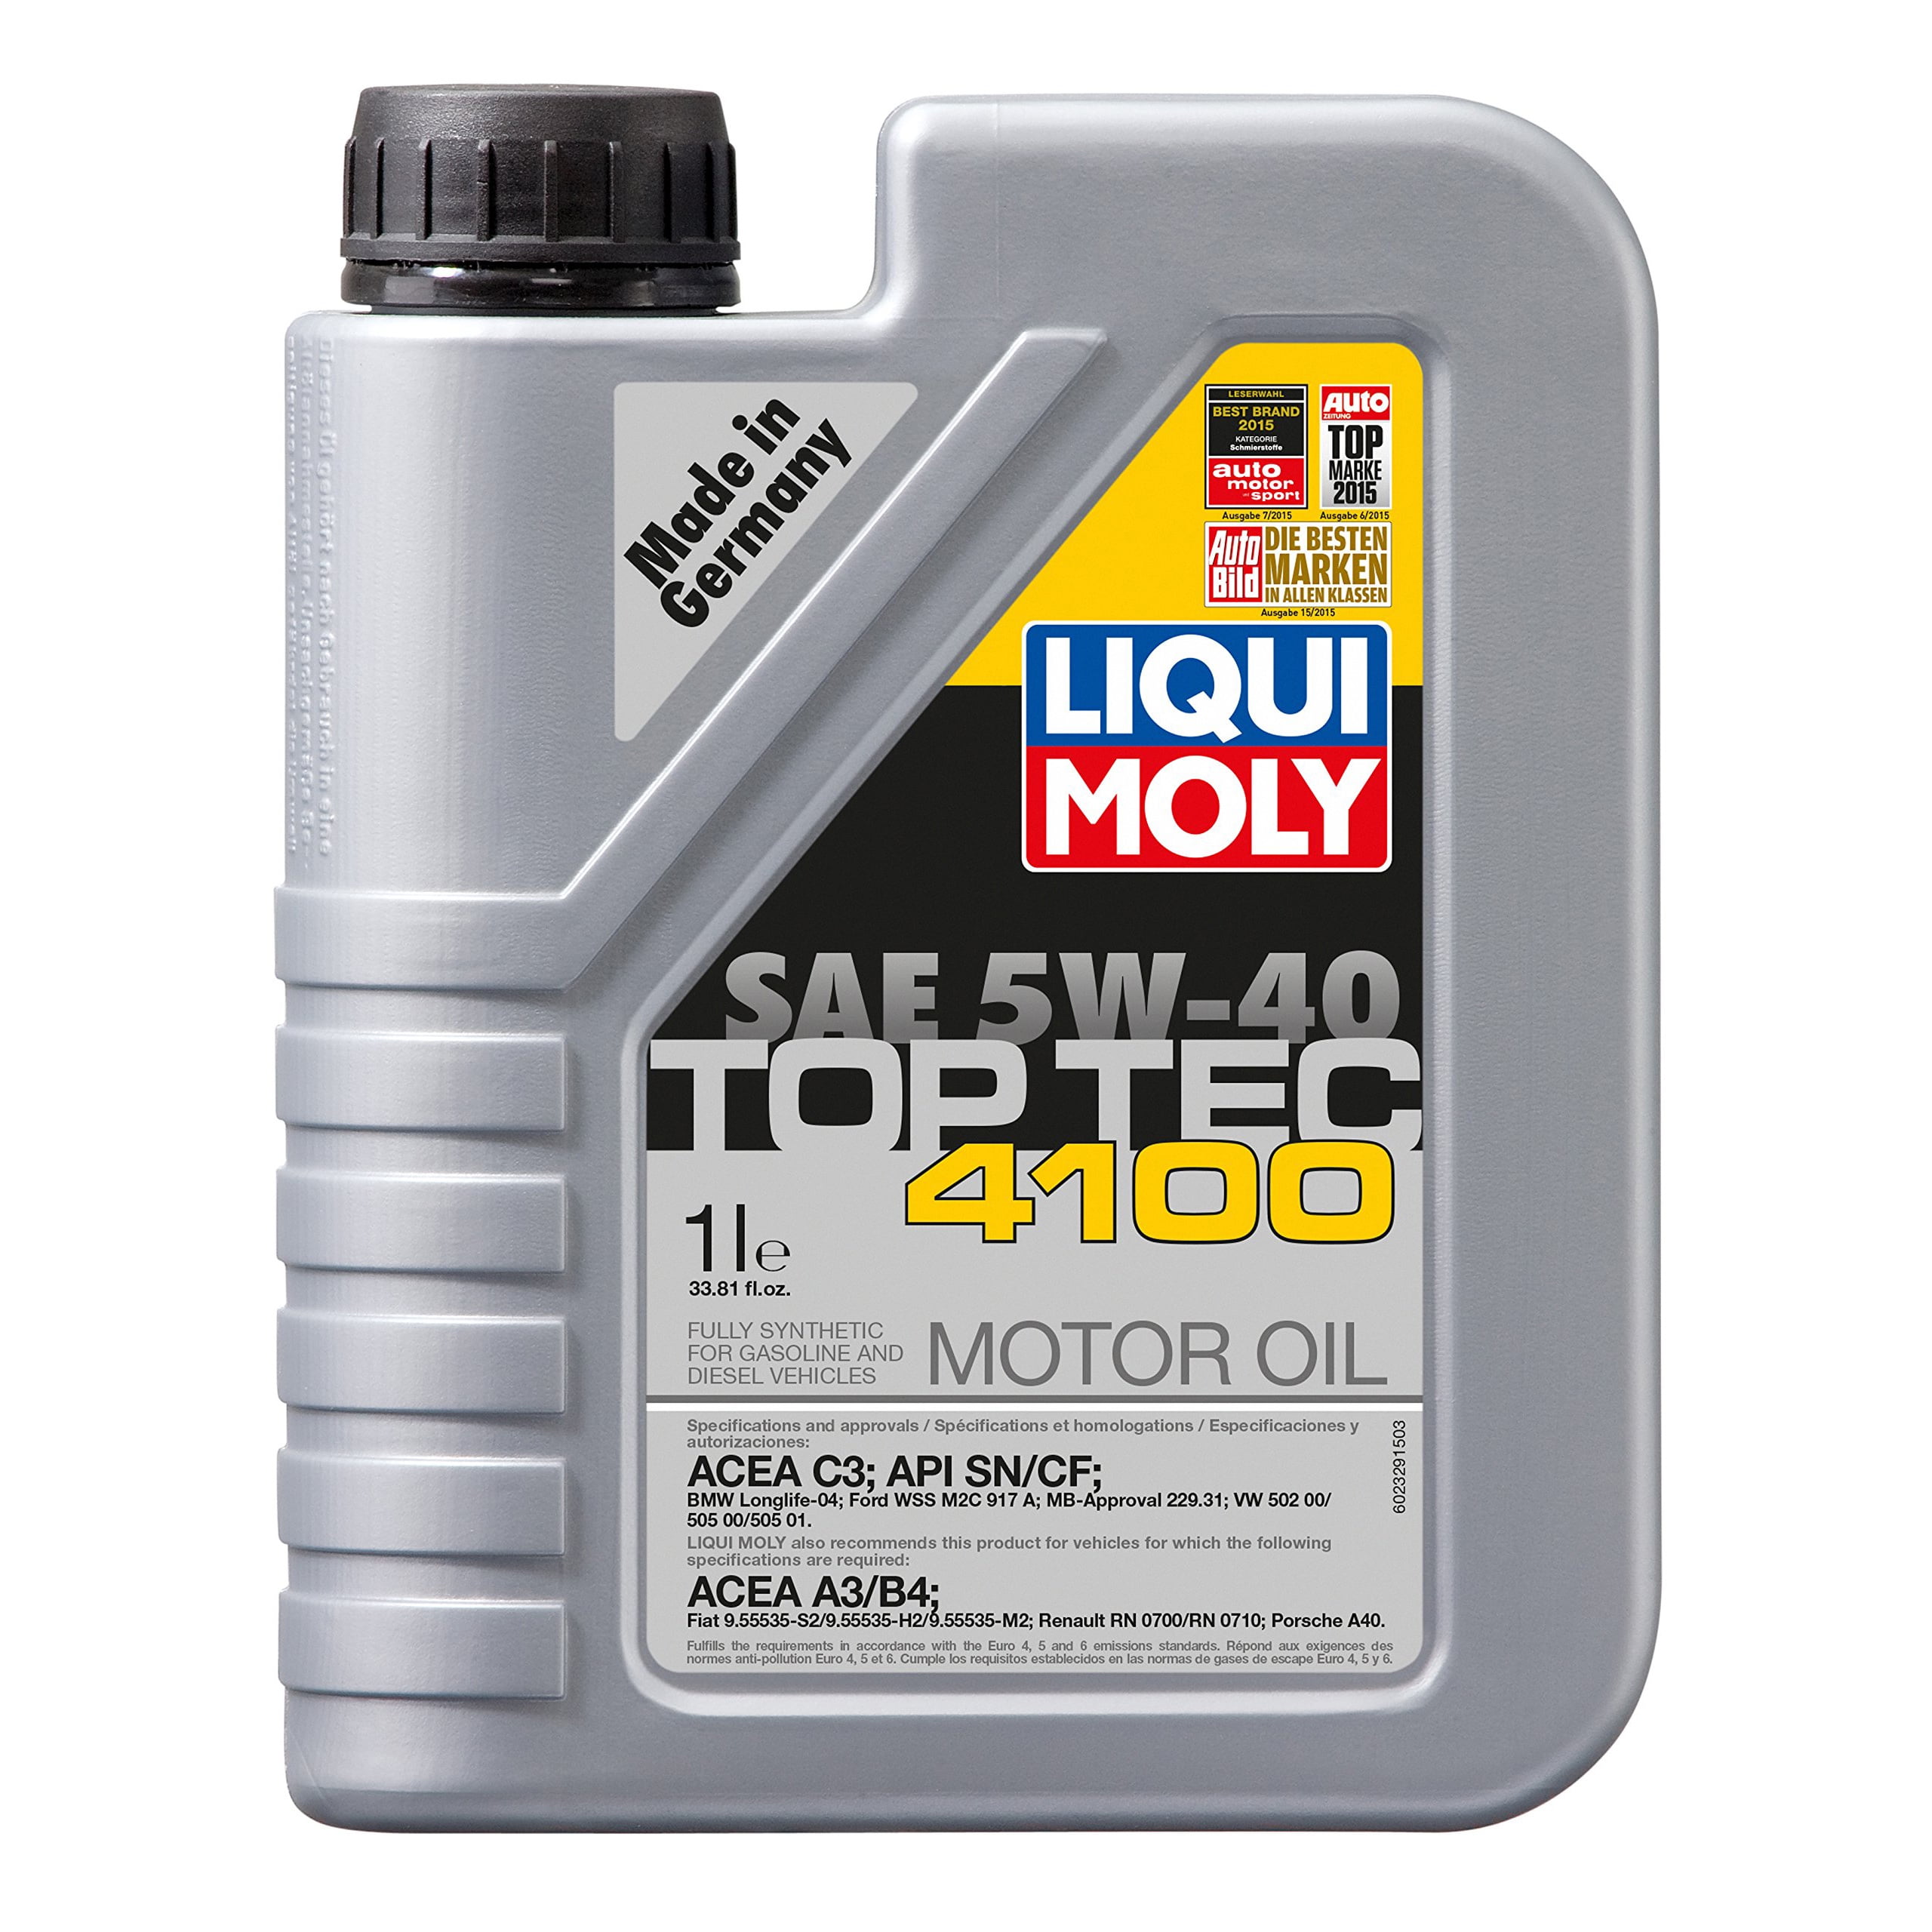 Hele tiden Fortælle Udgående LIQUI MOLY 1L Top Tec 4100 Motor Oil 5W-40 - Walmart.com